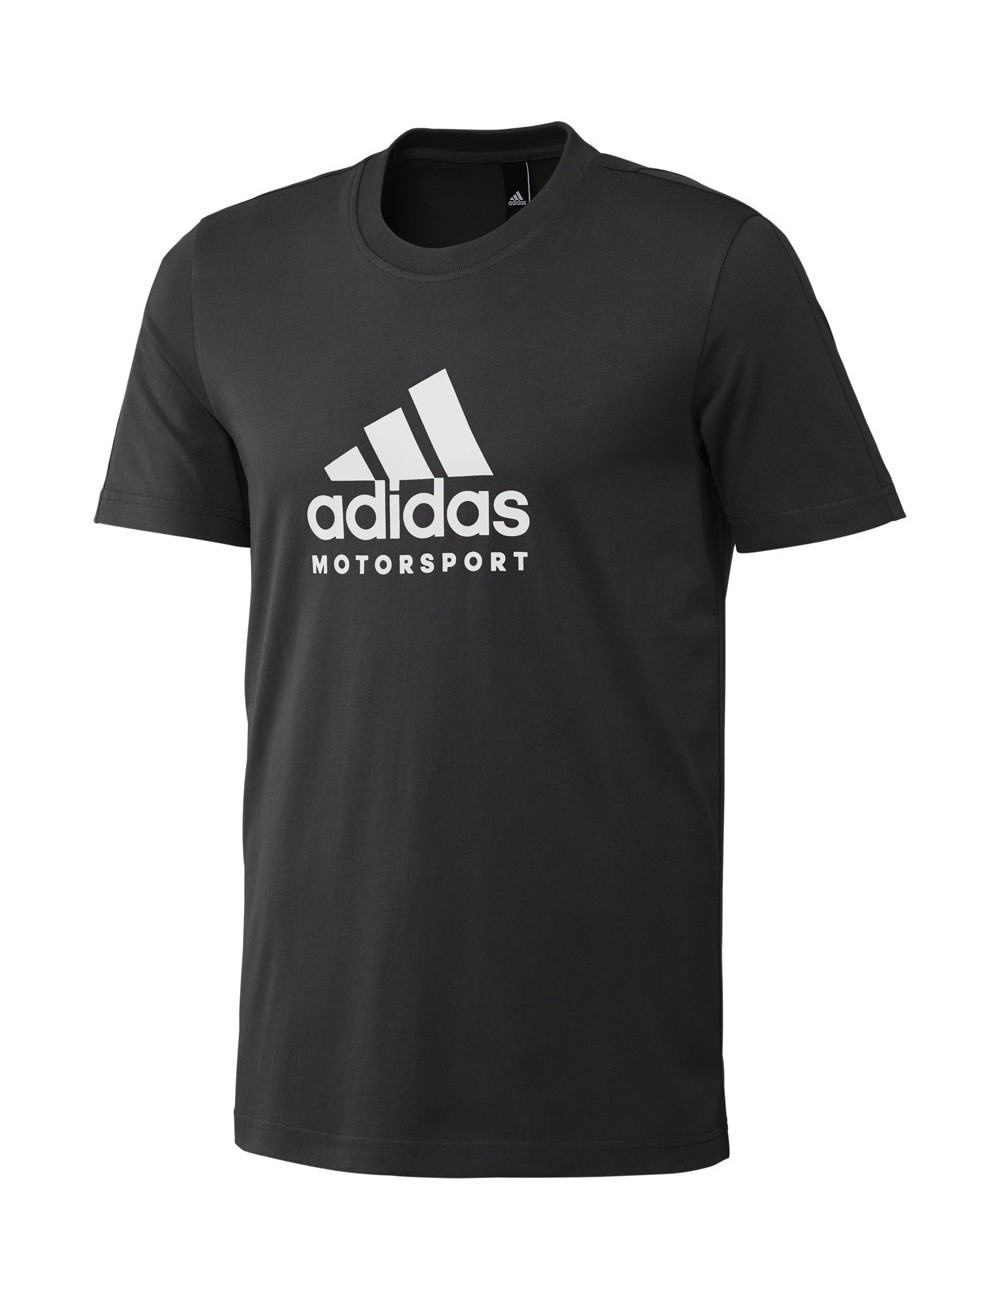 T-shirt Adidas Motorsport bianco / nero